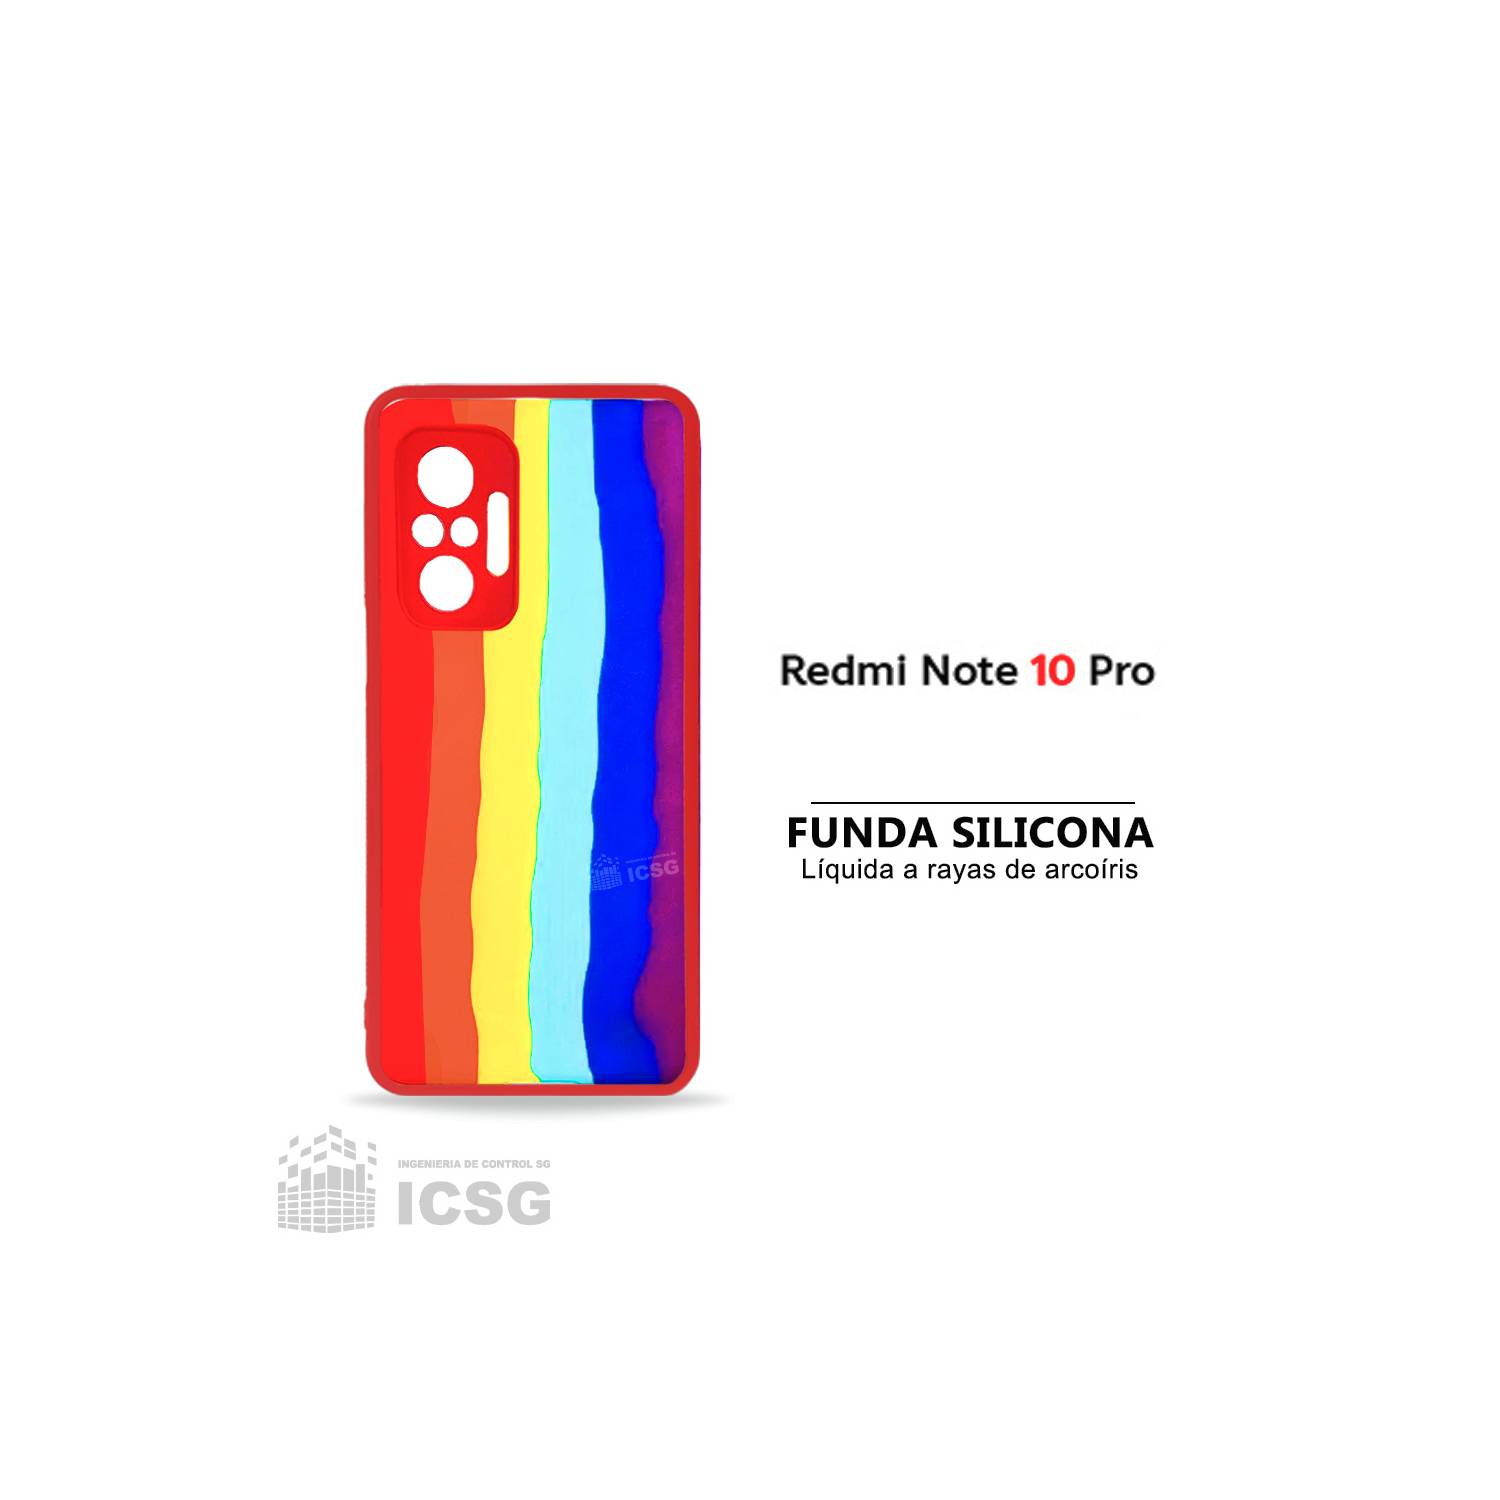 Funda Xiaomi Redmi Note 10 5G arcoiris. - ENVIO GRATIS